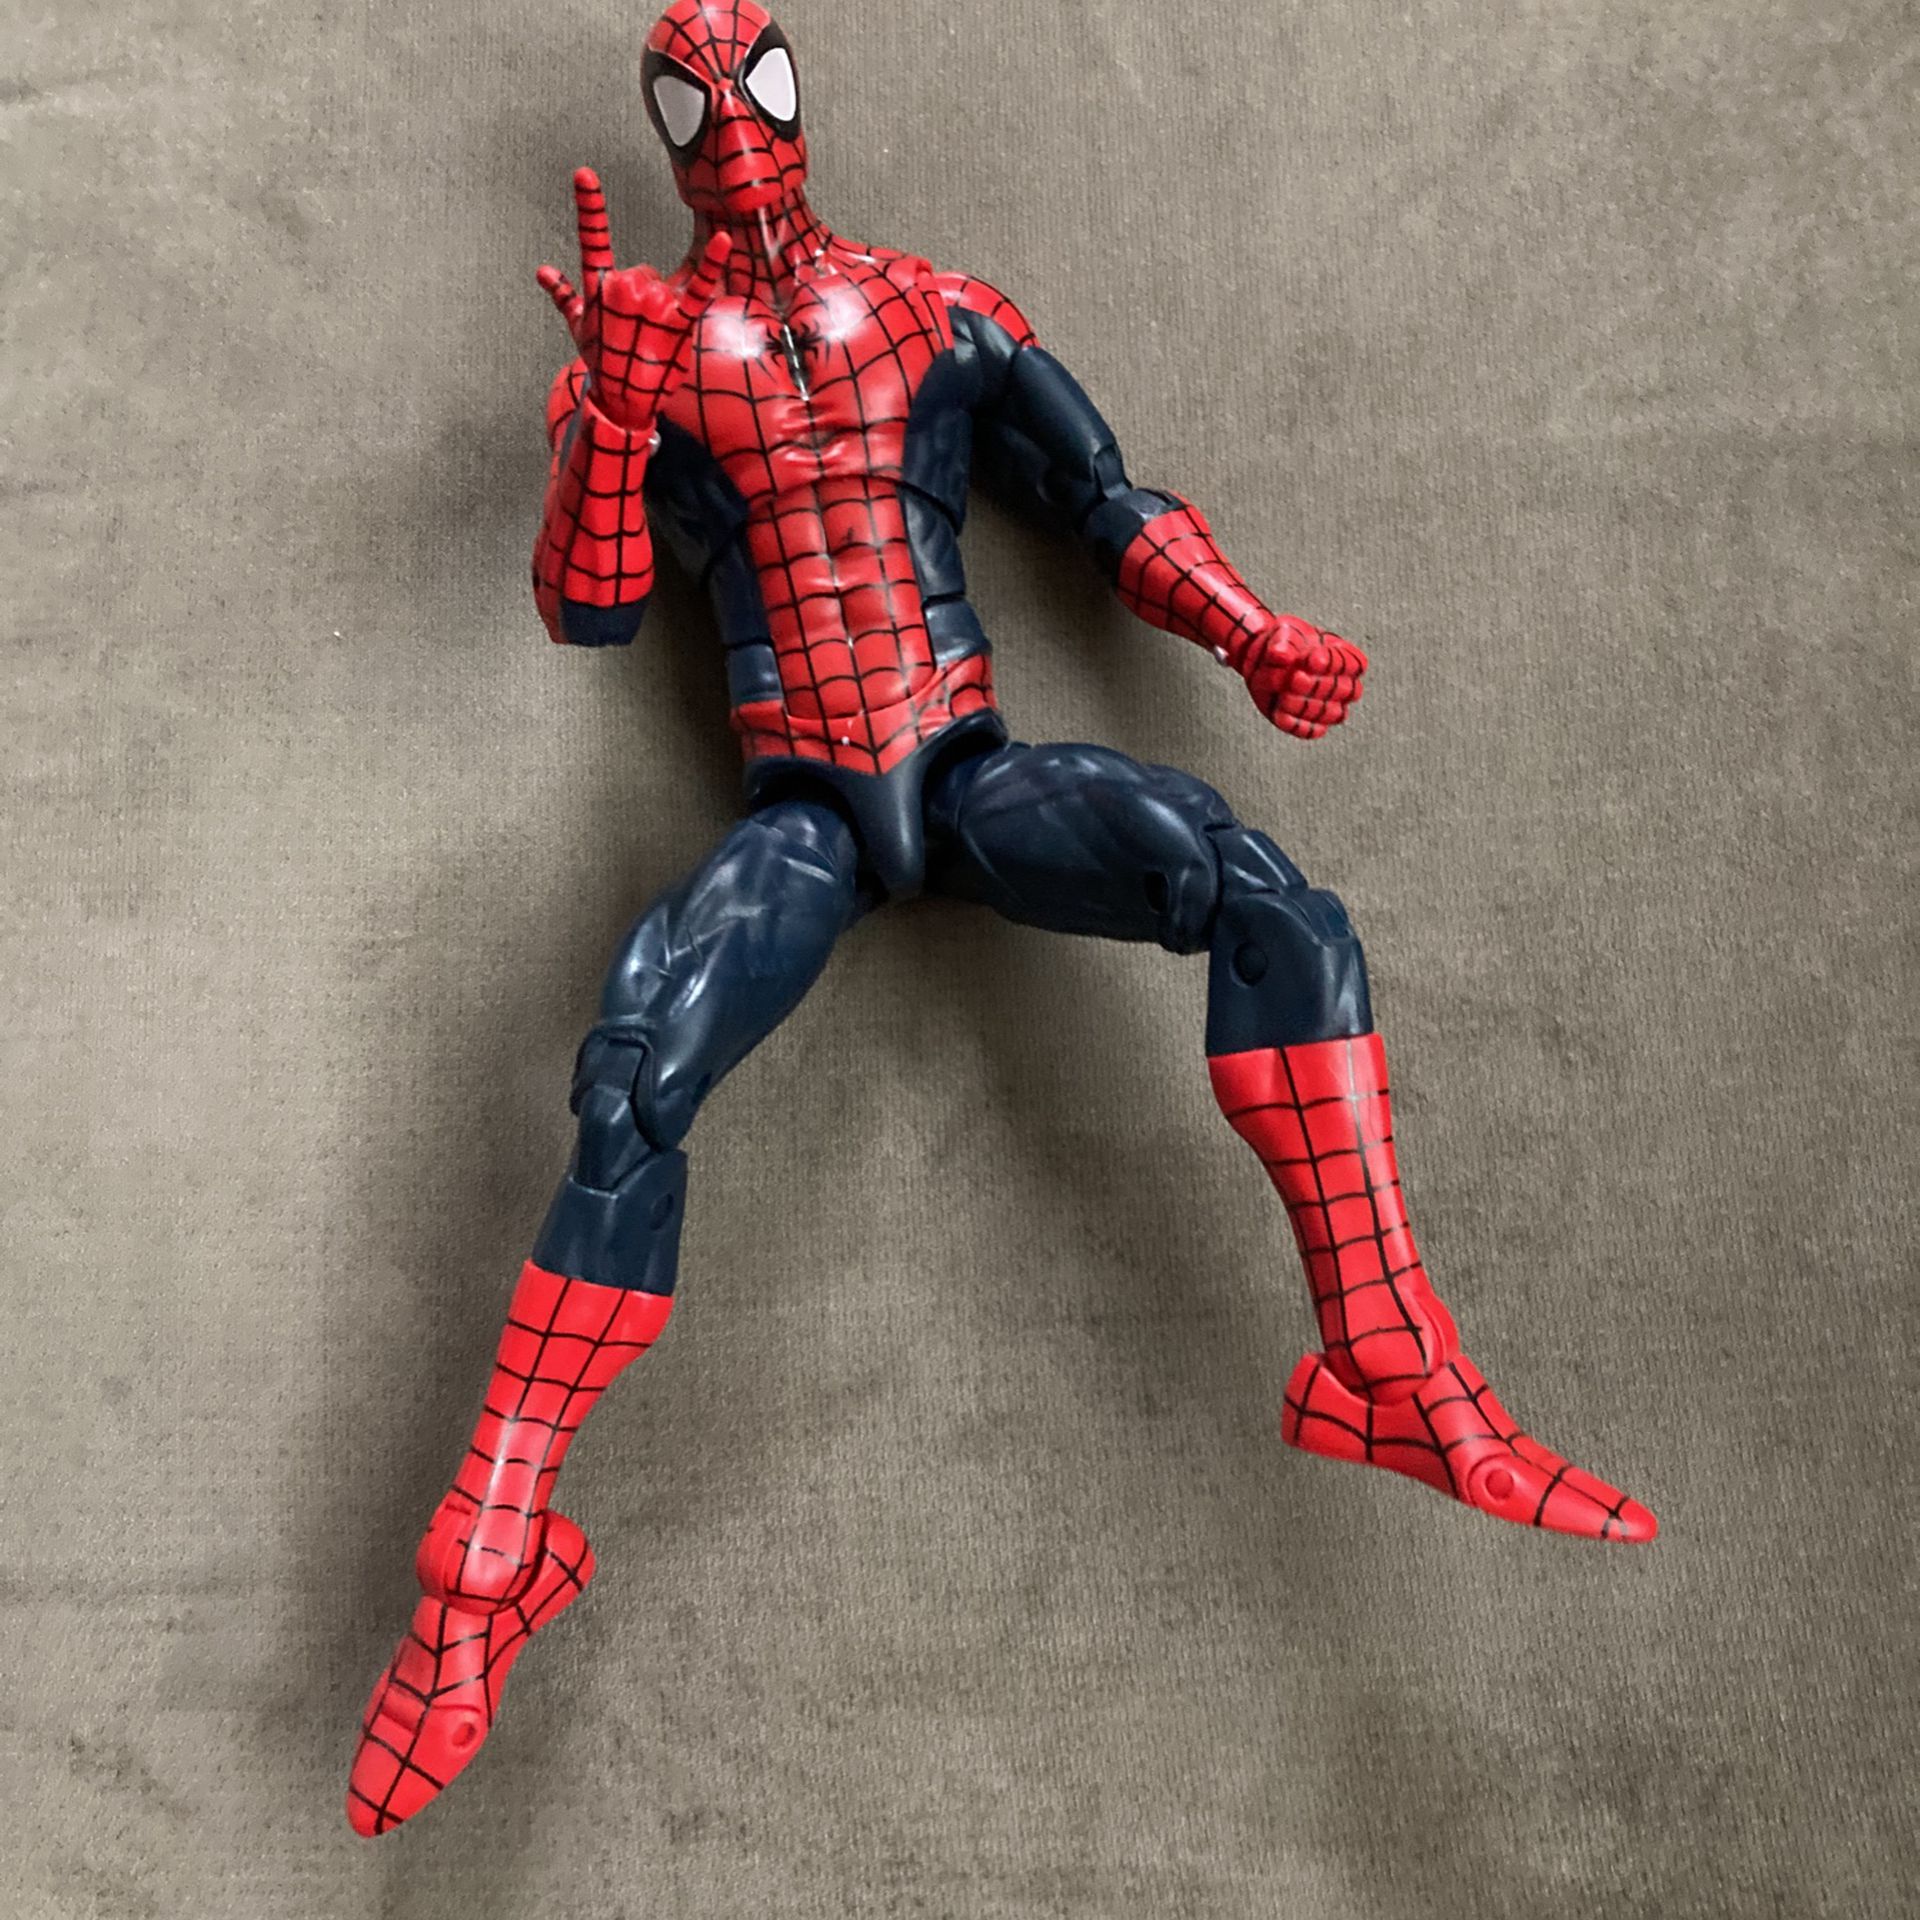 Marvel Legends Spiderman Action Figure Toy